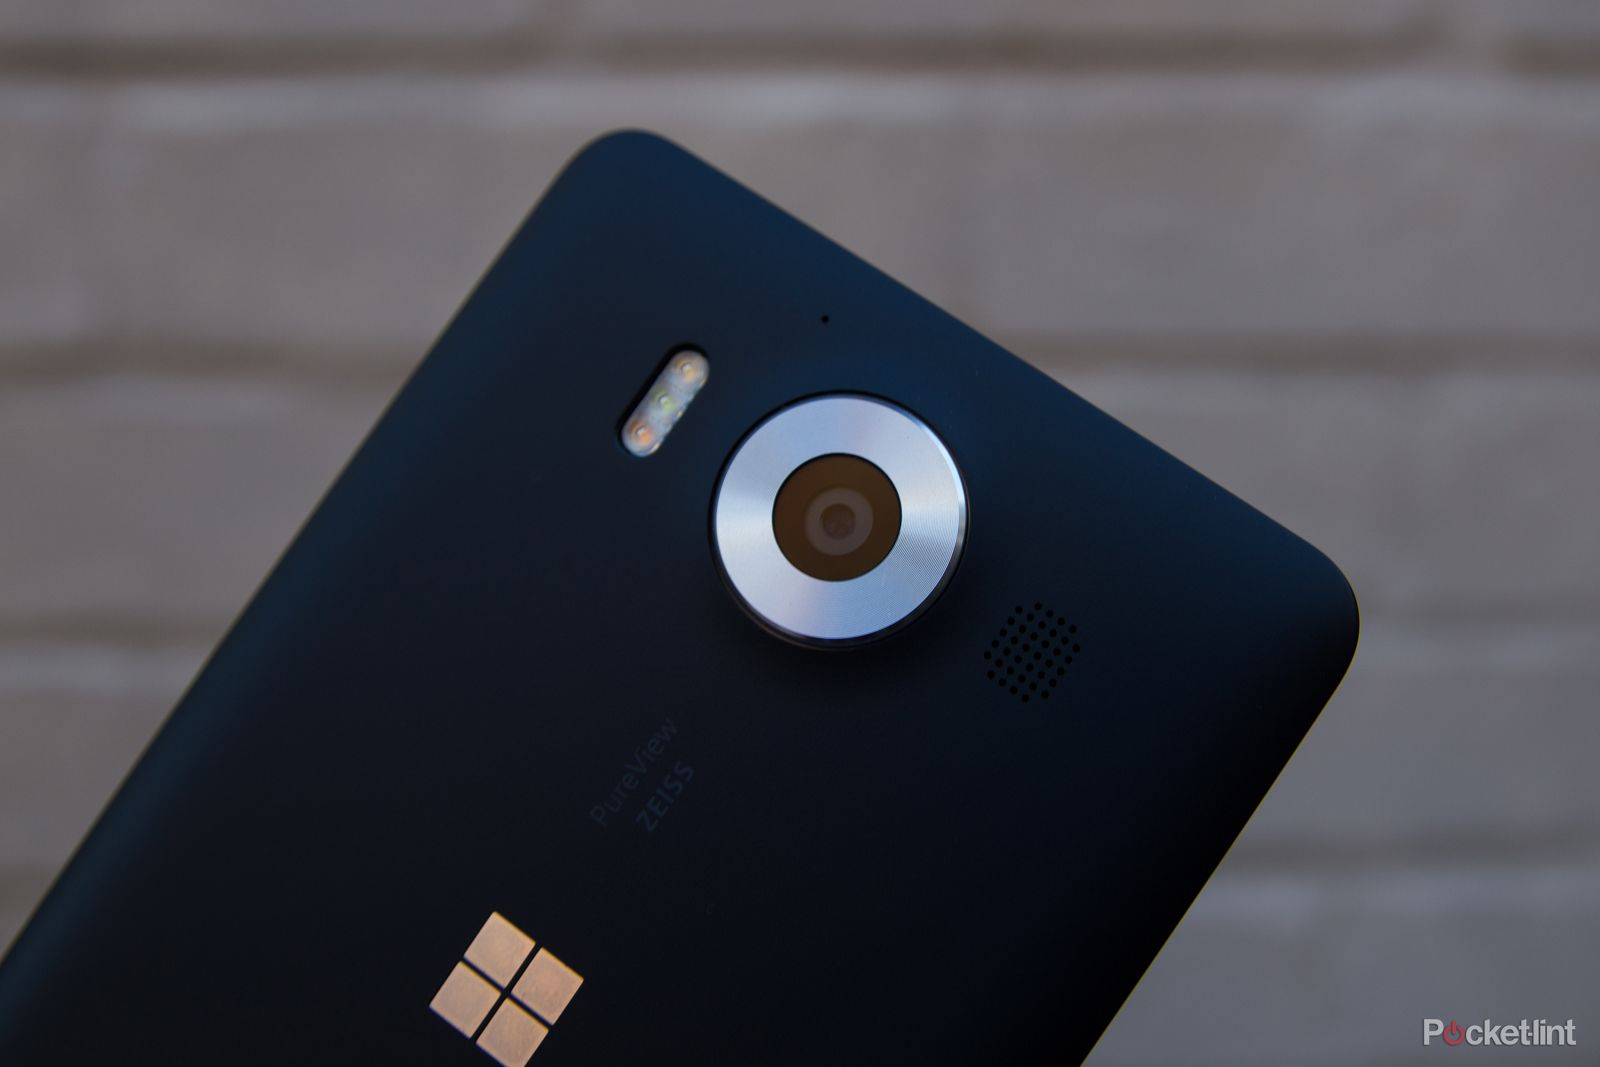 massive leak suggests windows 10 microsoft lumia 750 is heading to mwc 2016 maybe a lumia 850 image 1